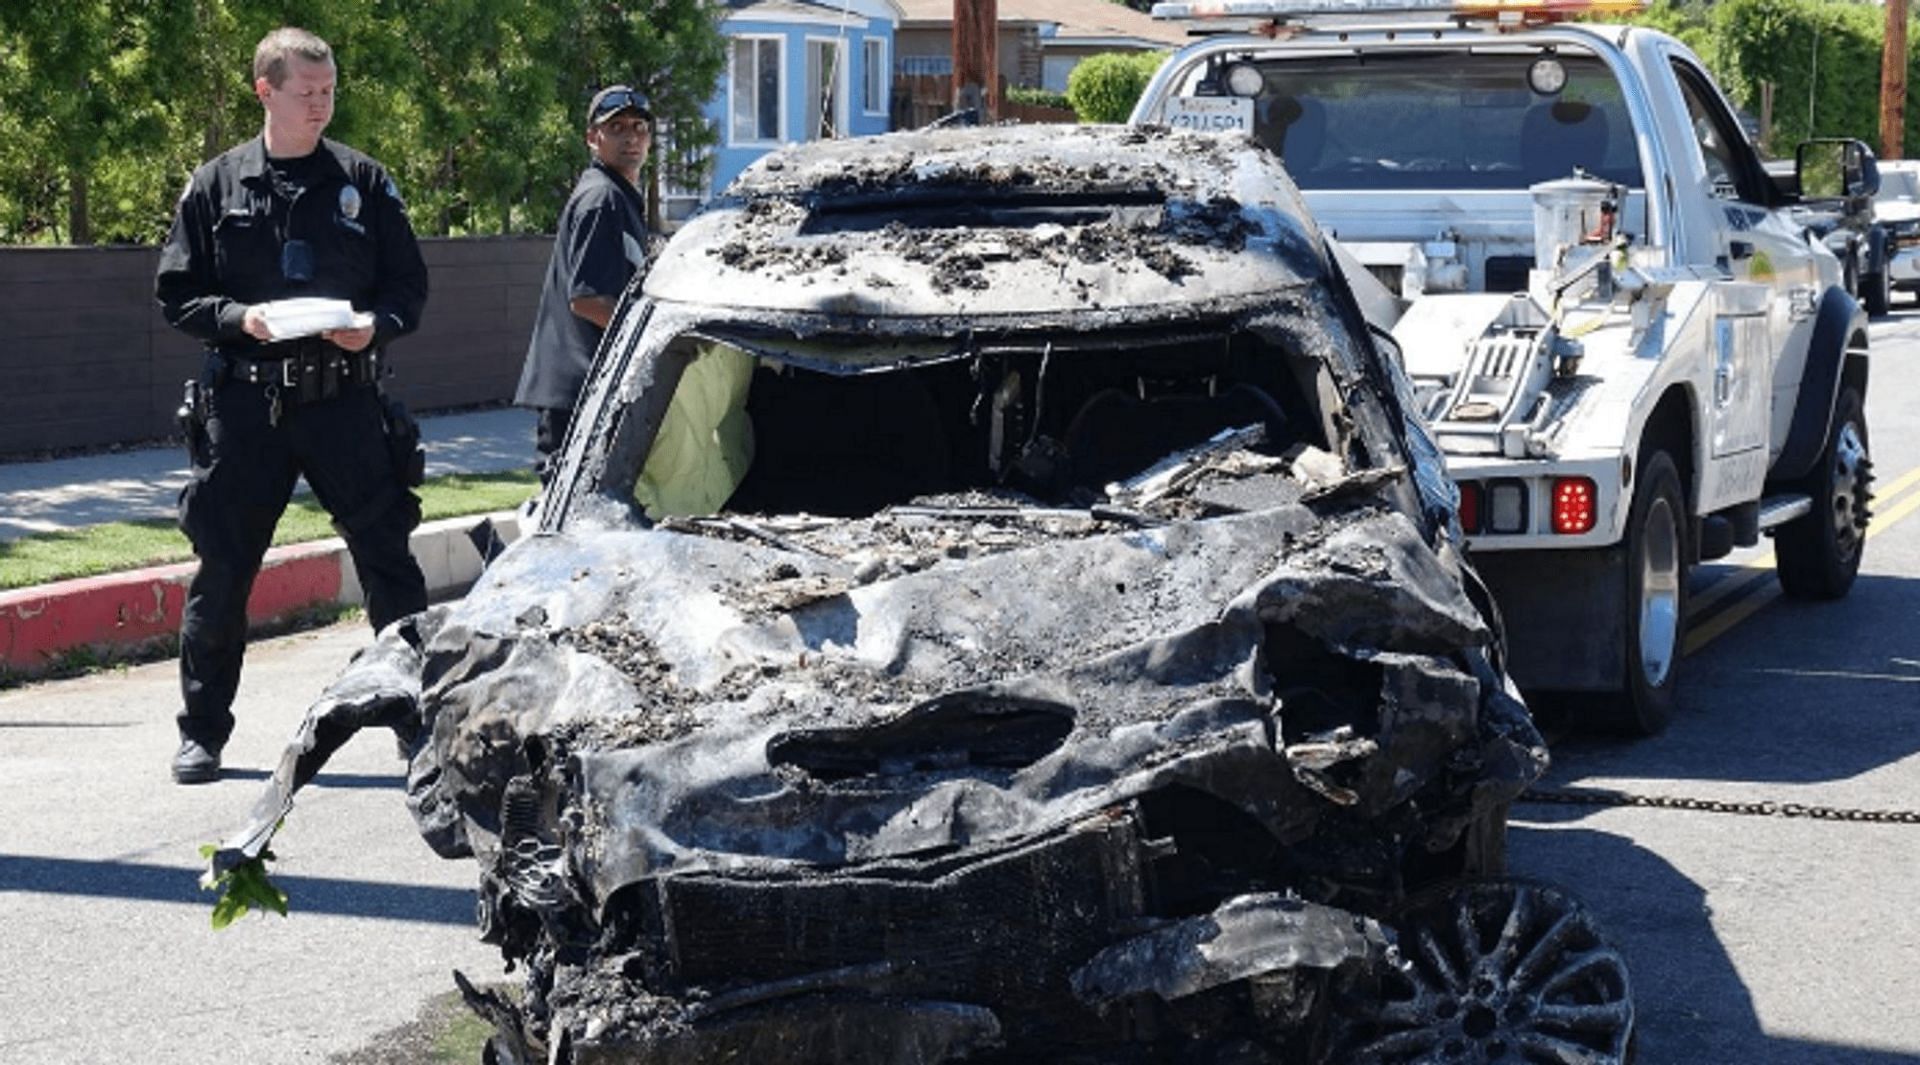 Anne Heche's damaged vehicle (Image via Backgrid)